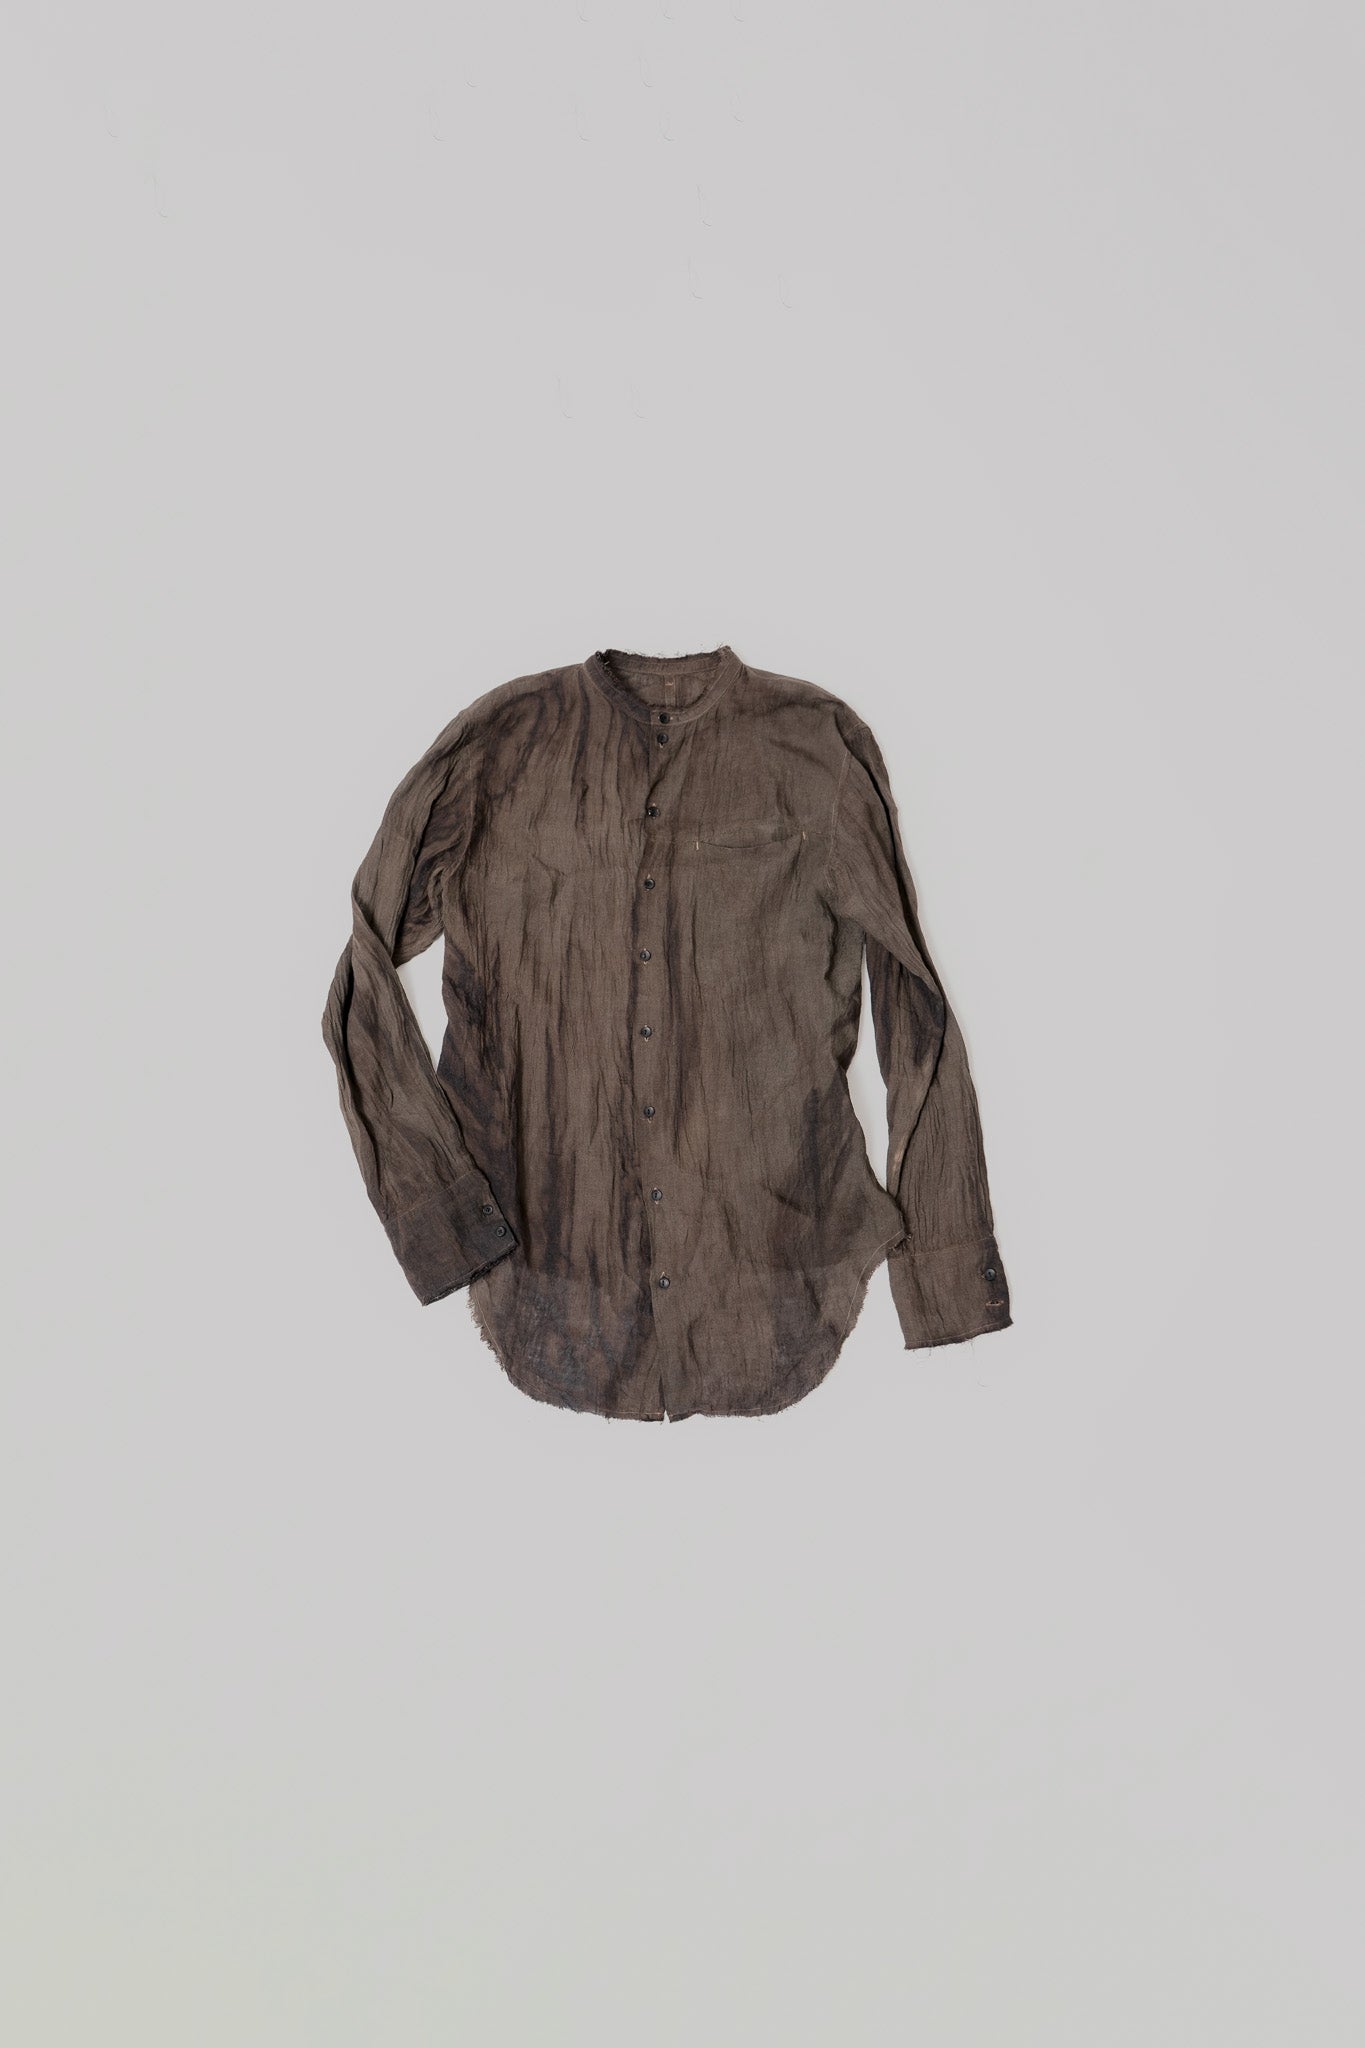 031 - Scaffolding Shirt (Brown)